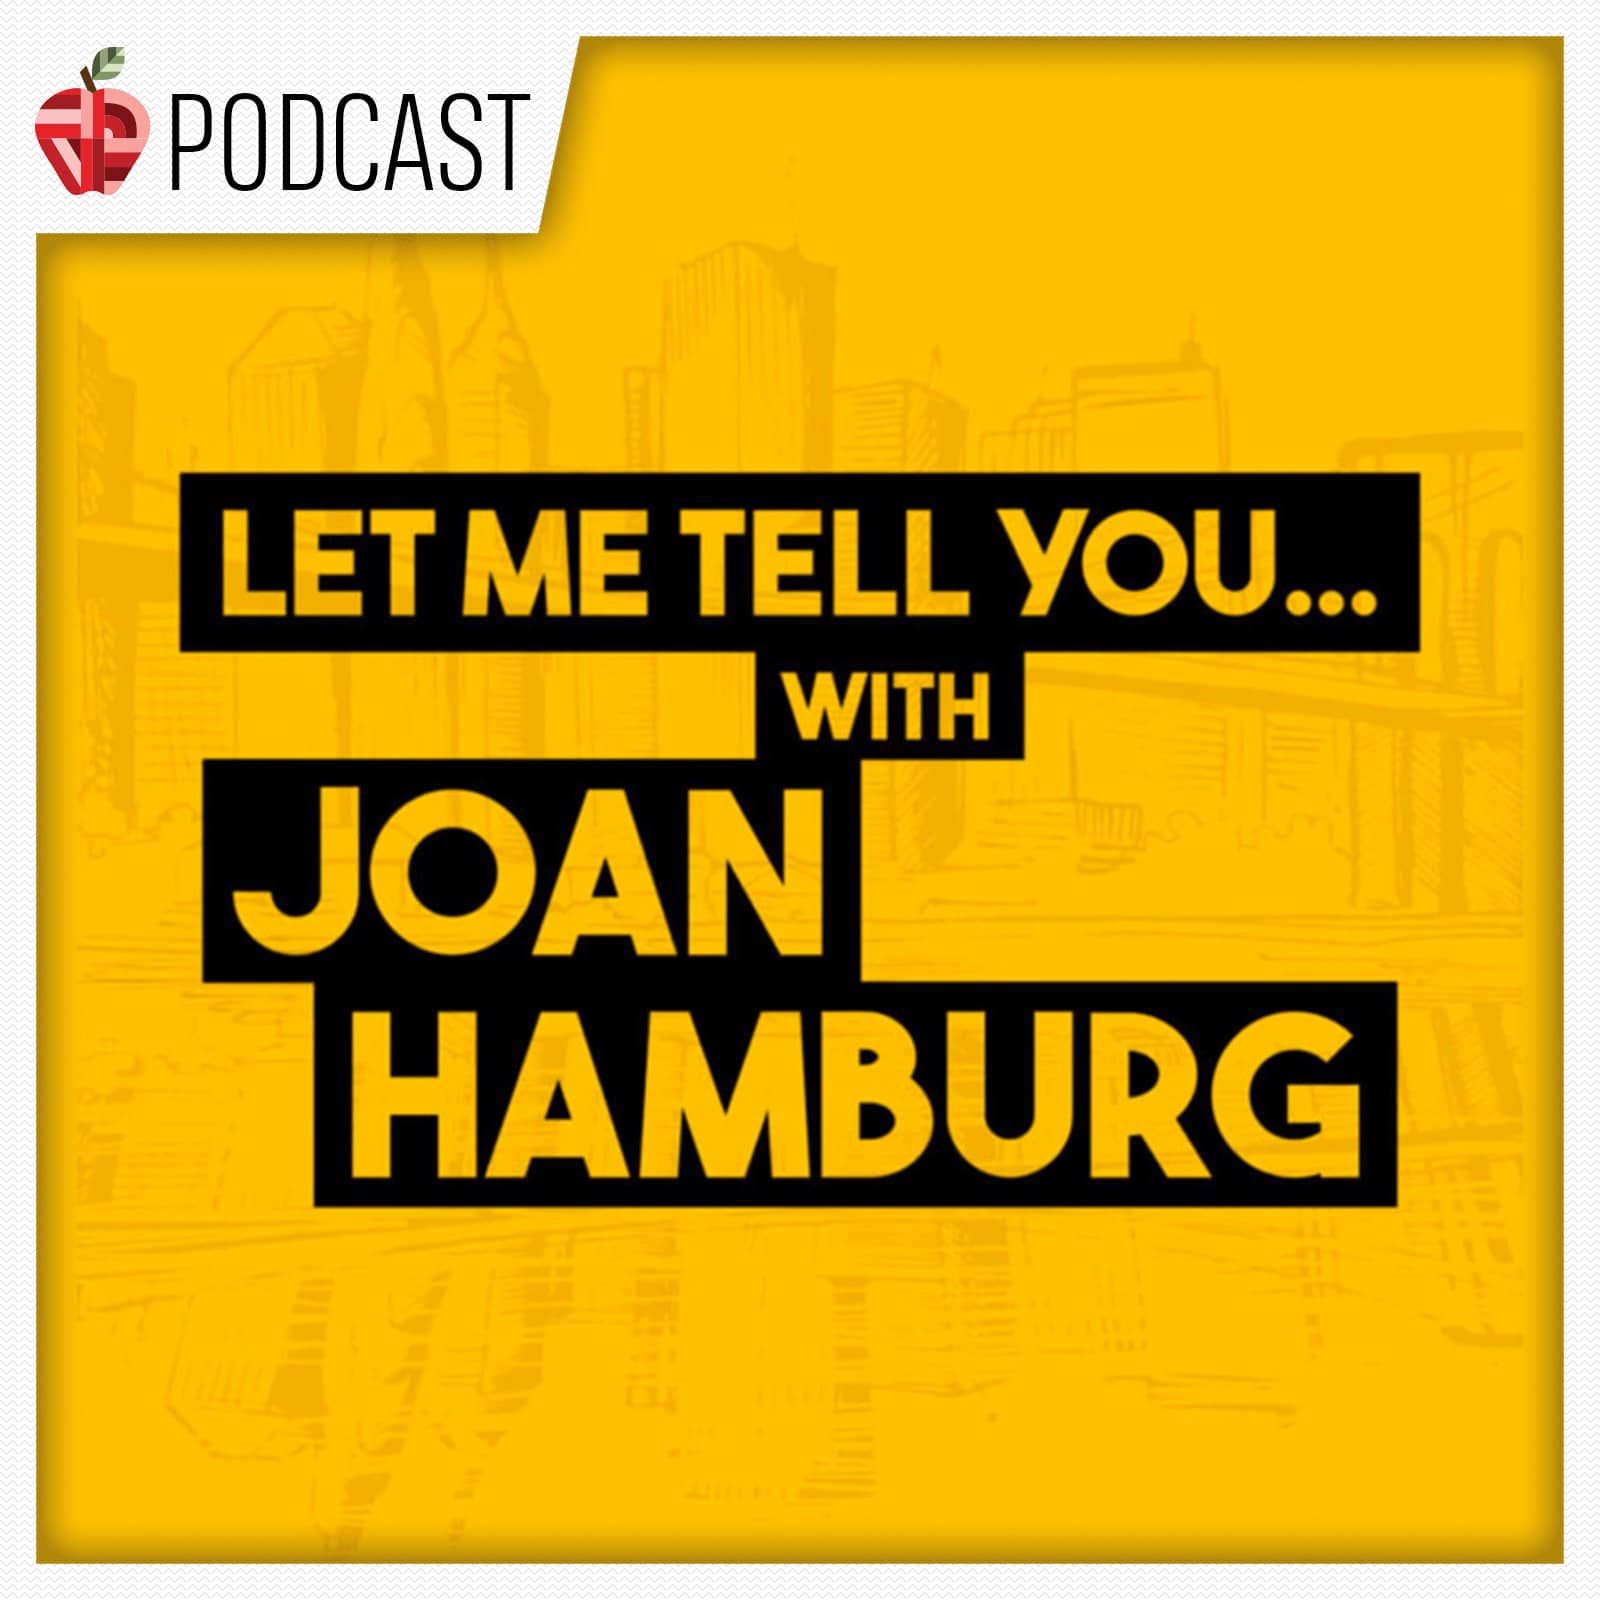 joan-hamburg-let-me-tell-you-podcast-podcast-logo-16